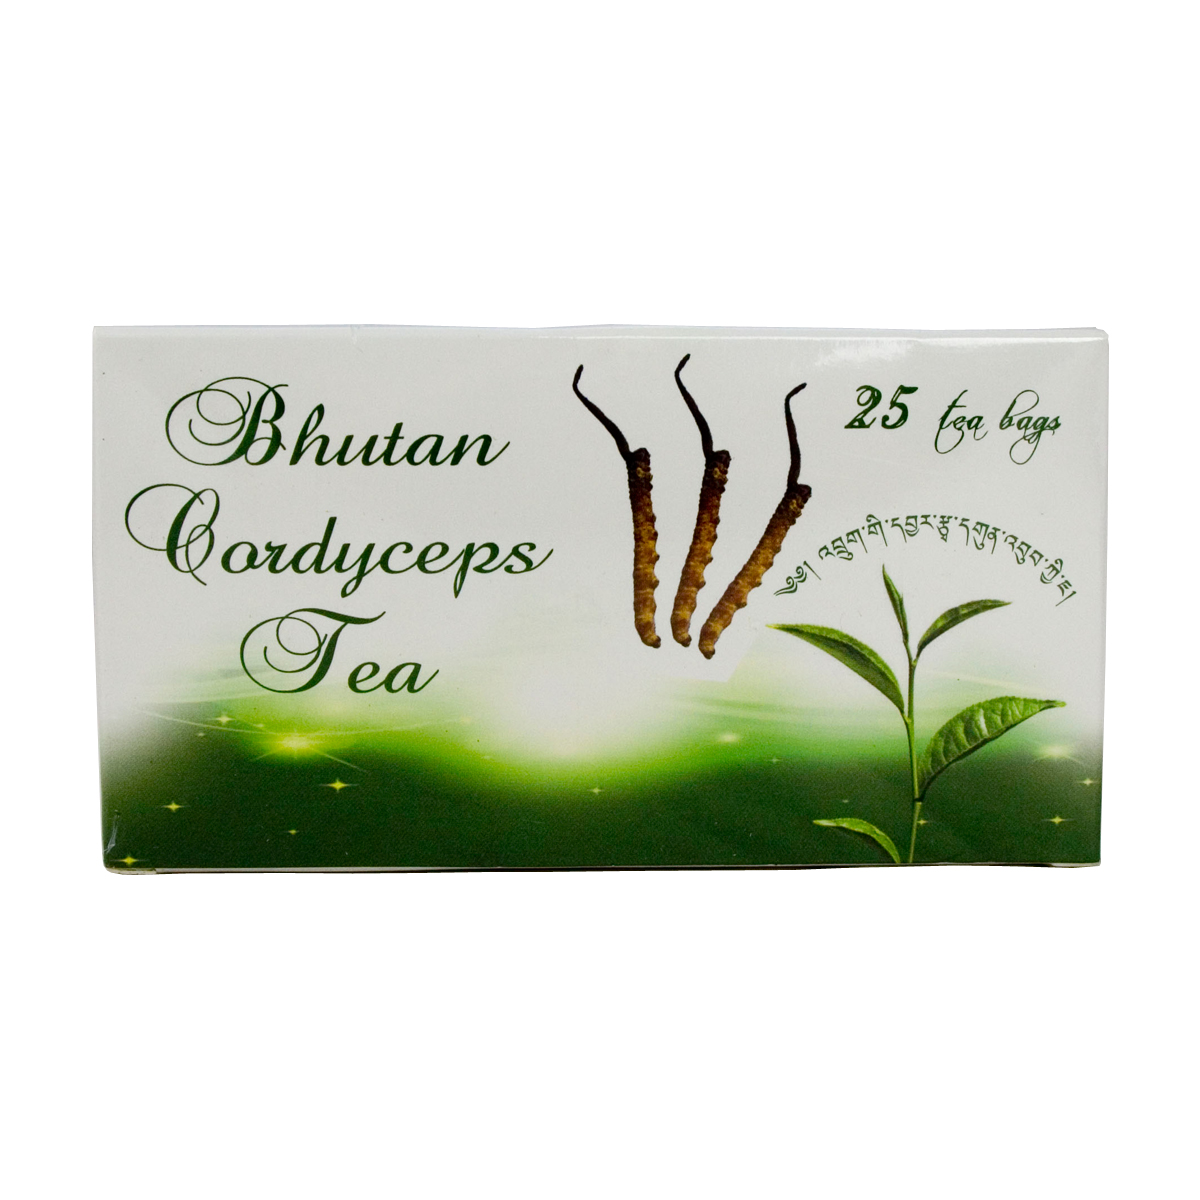 Picture of Bhutan Cordyceps Green Tea